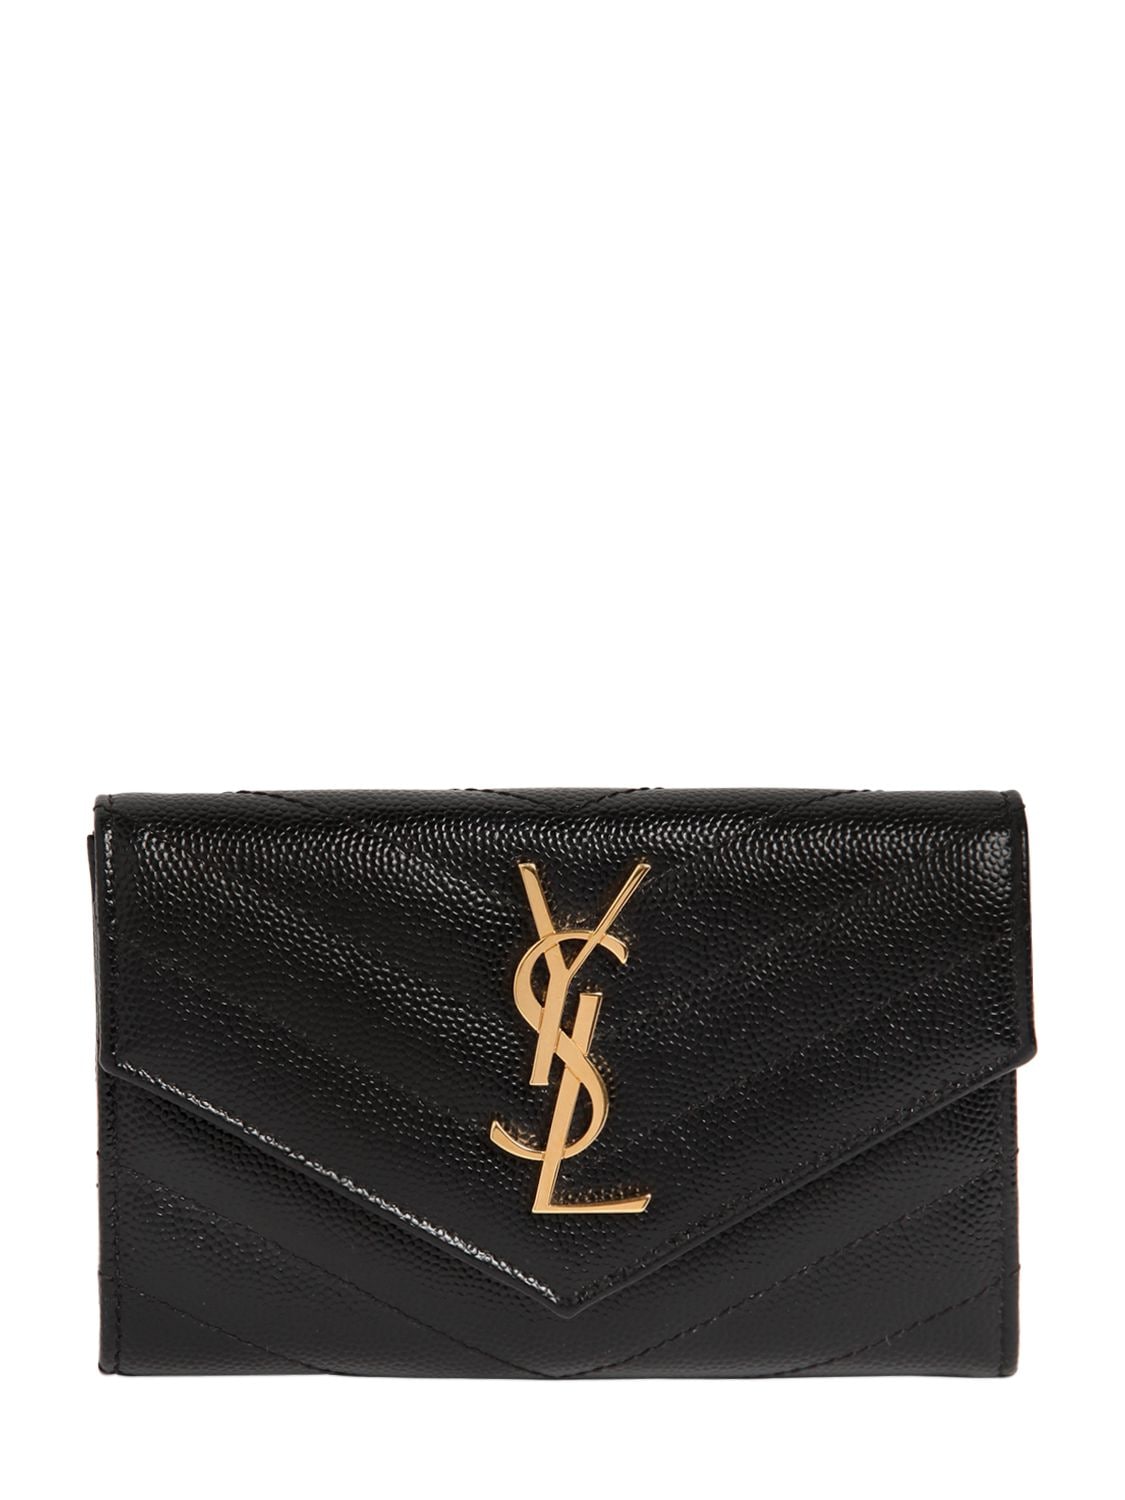 Saint Laurent Monogram Leather Envelope Wallet In Black